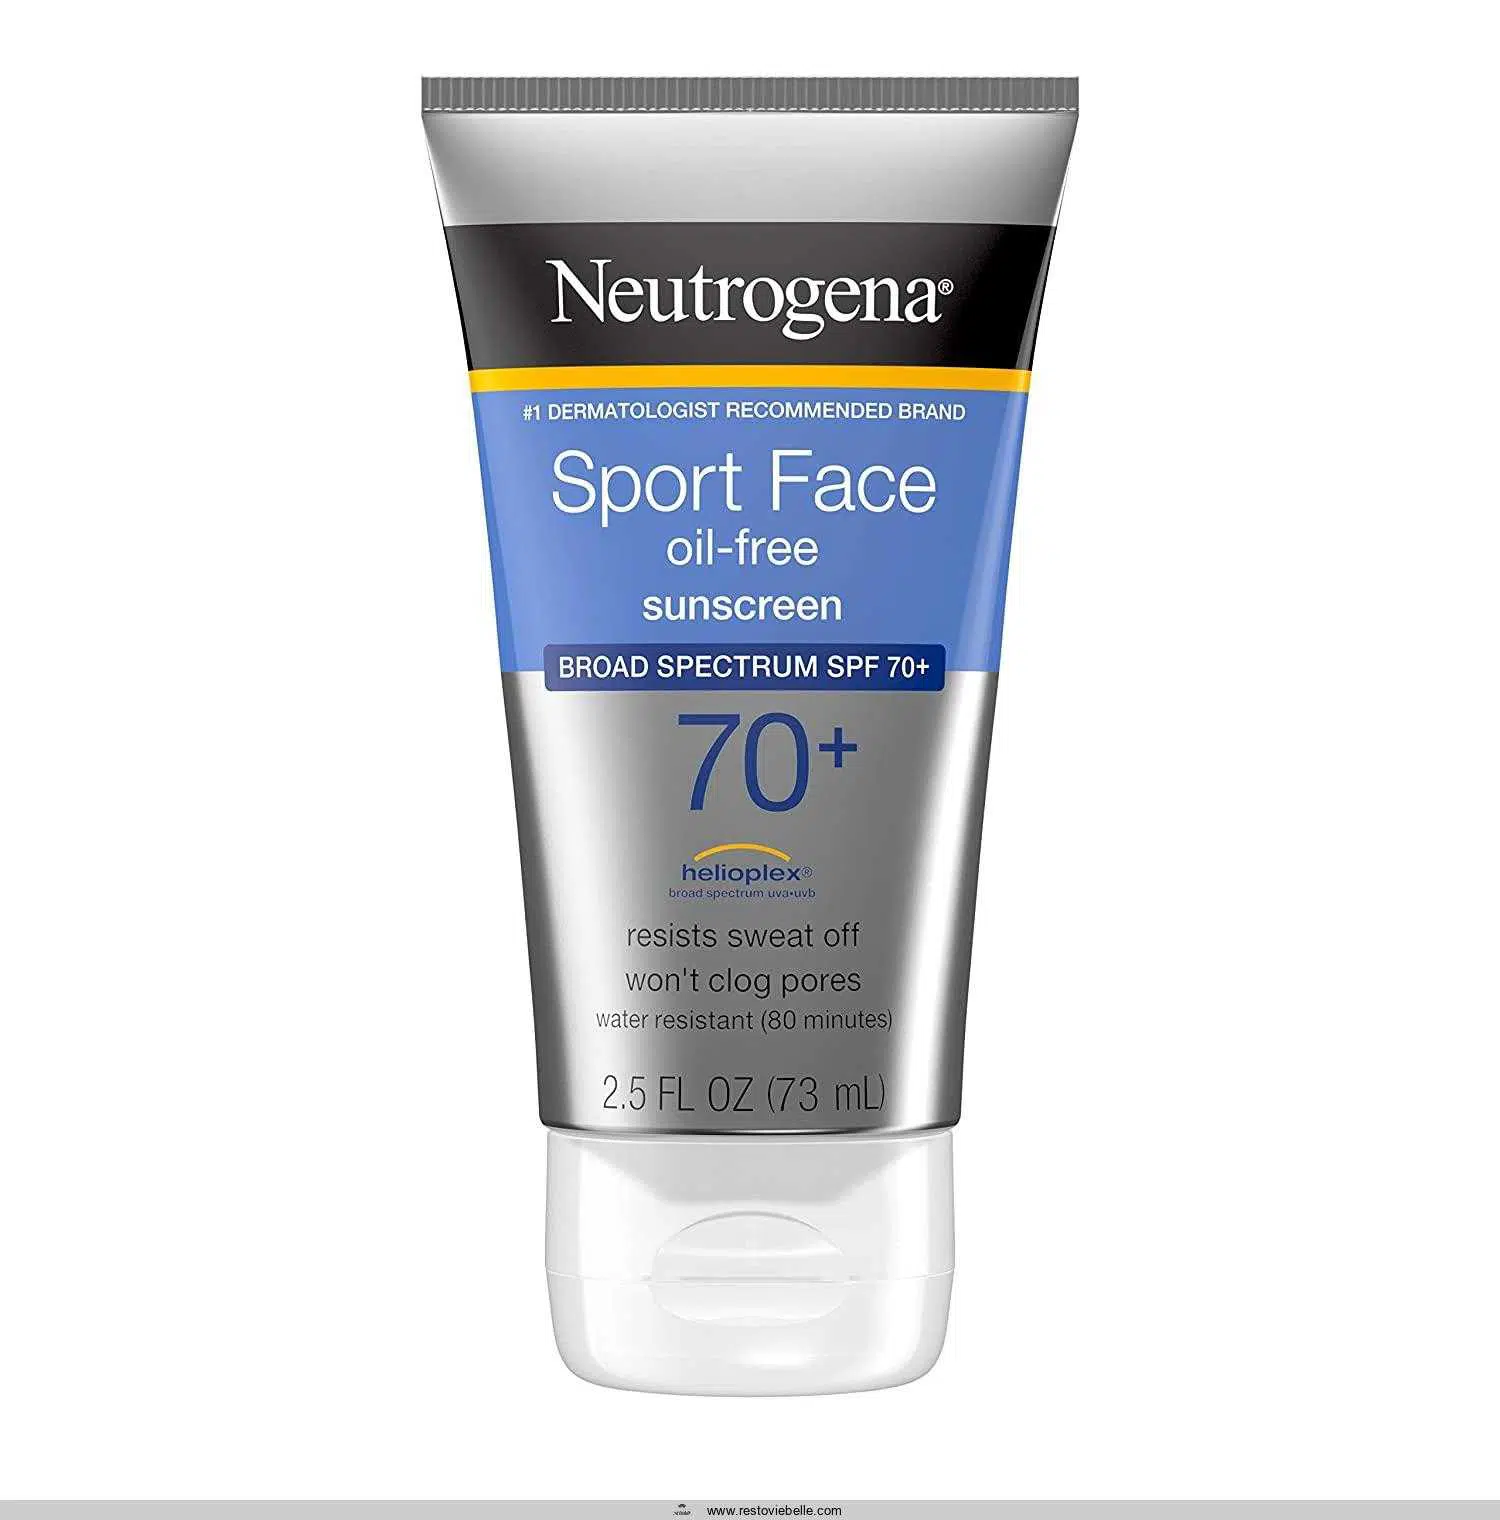 Neutrogena Sport Face Oil-free Sunscreen